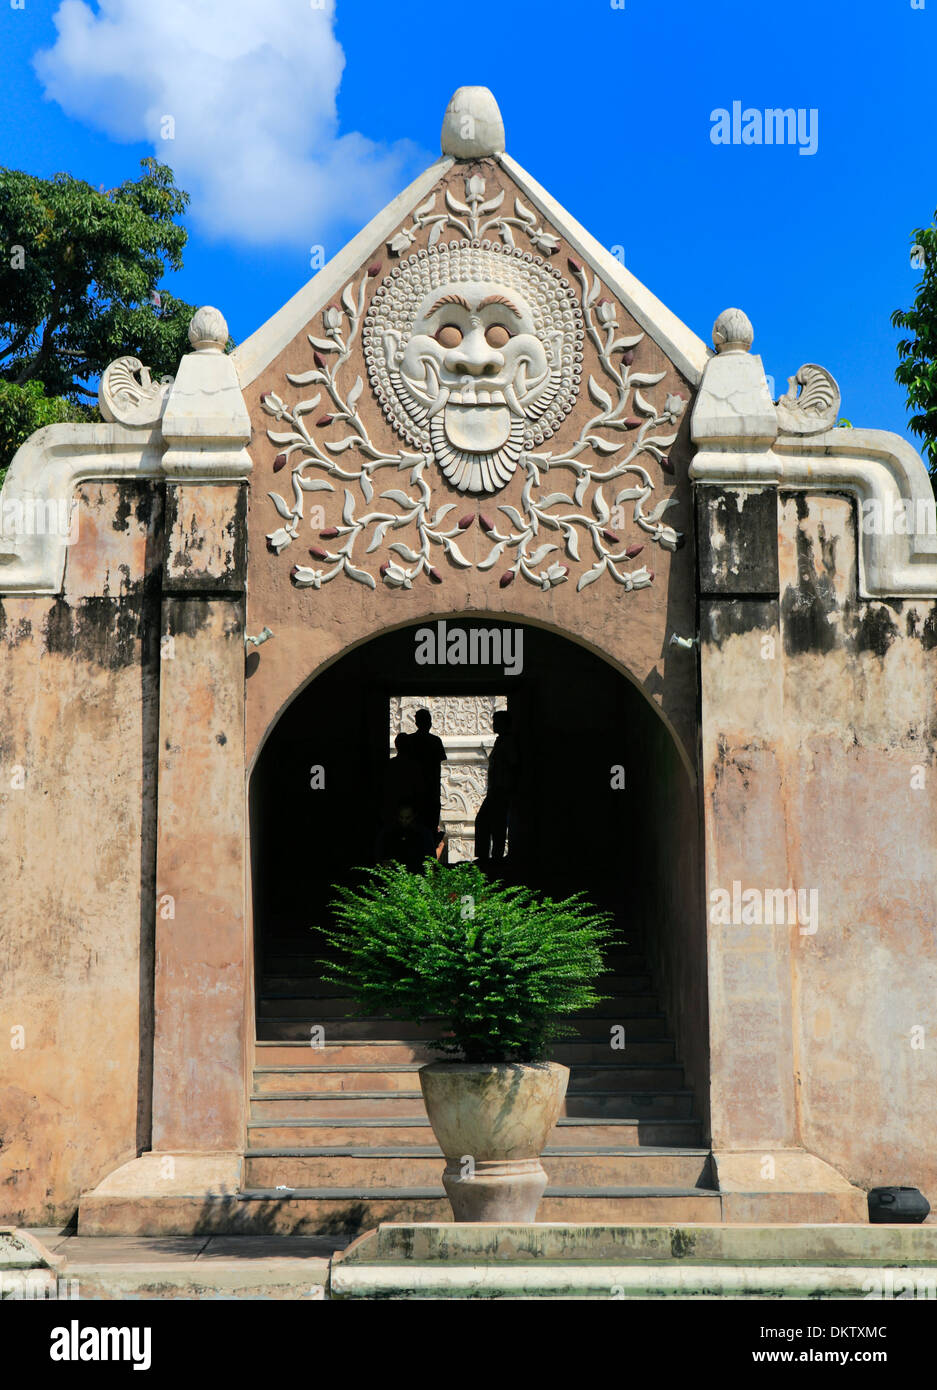 El Taman Sari (Palacio del Agua, 1765), Yogyakarta, Java, Indonesia Foto de stock